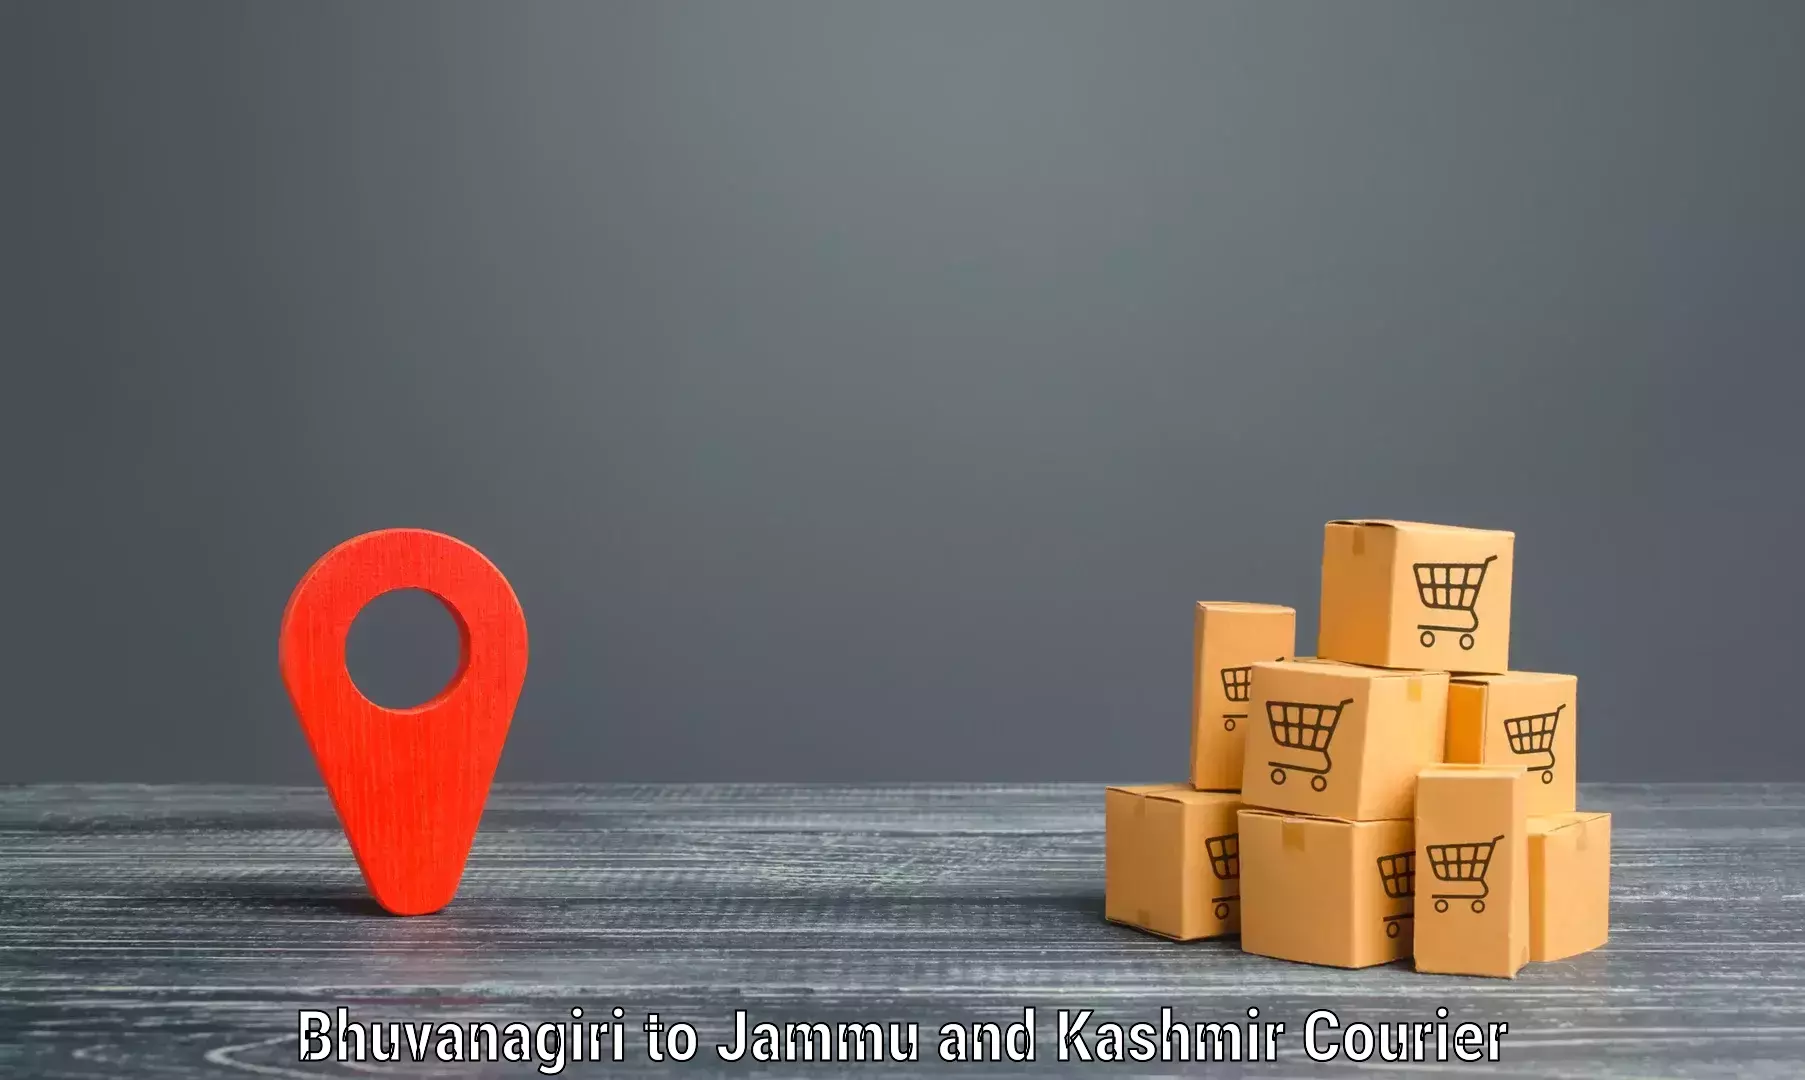 Advanced delivery network Bhuvanagiri to Leh